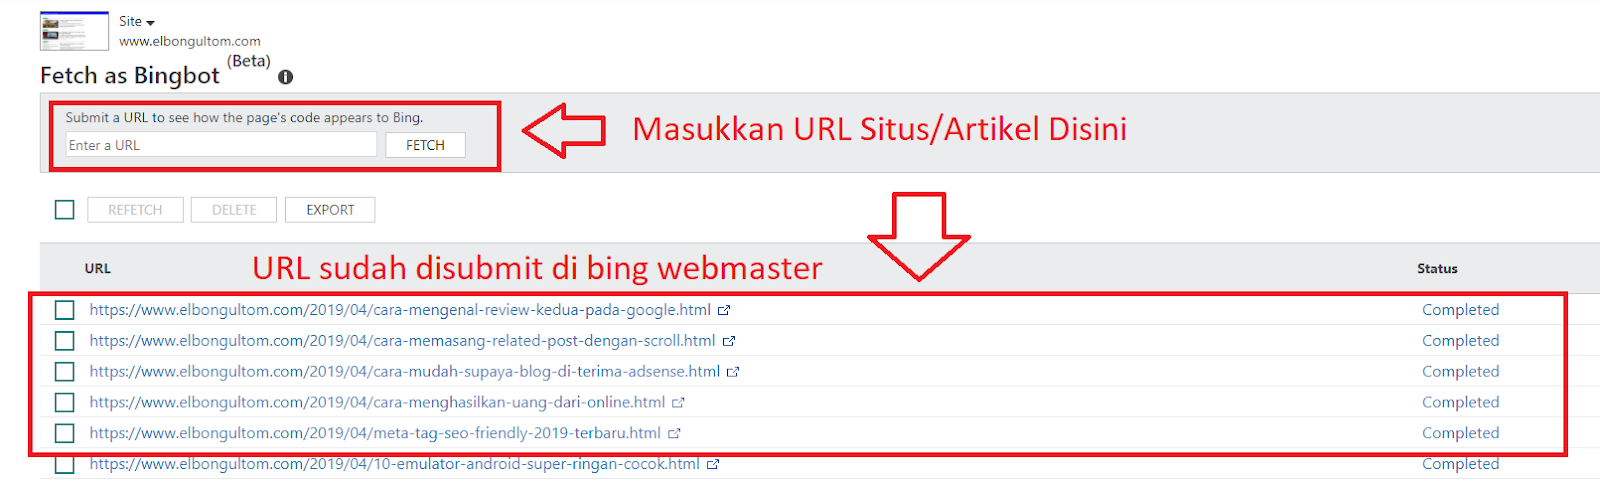 Fetch url. Адрес URL Bing com. Google search engine URL. How to add Bing to ur websites.